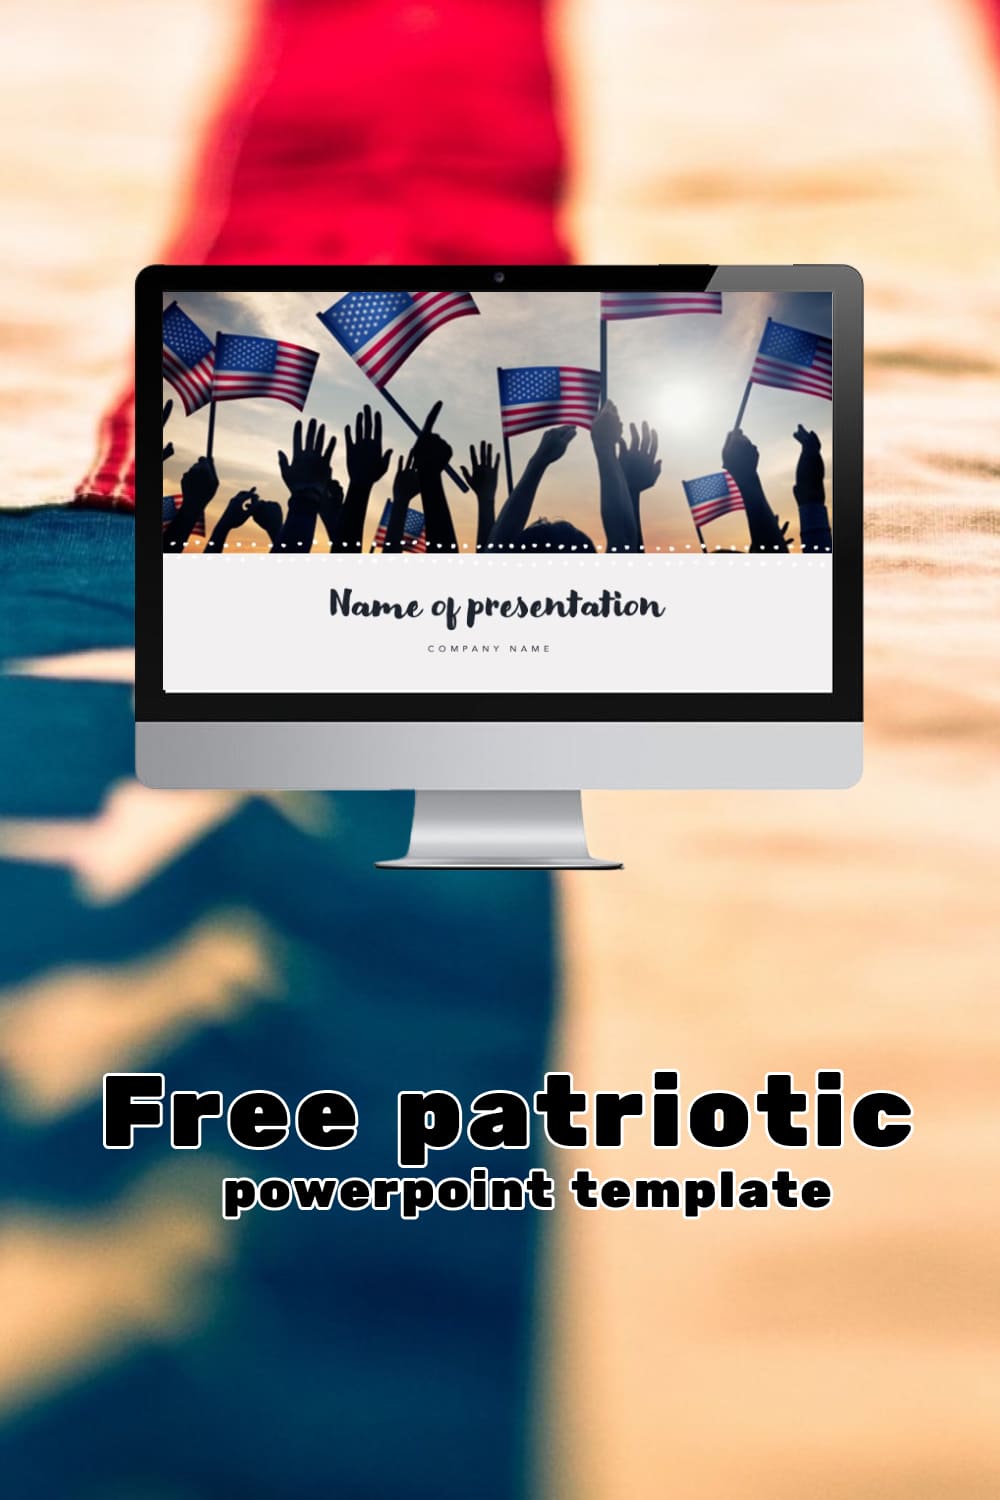 Pinterest Free Patriotic Powerpoint Template.